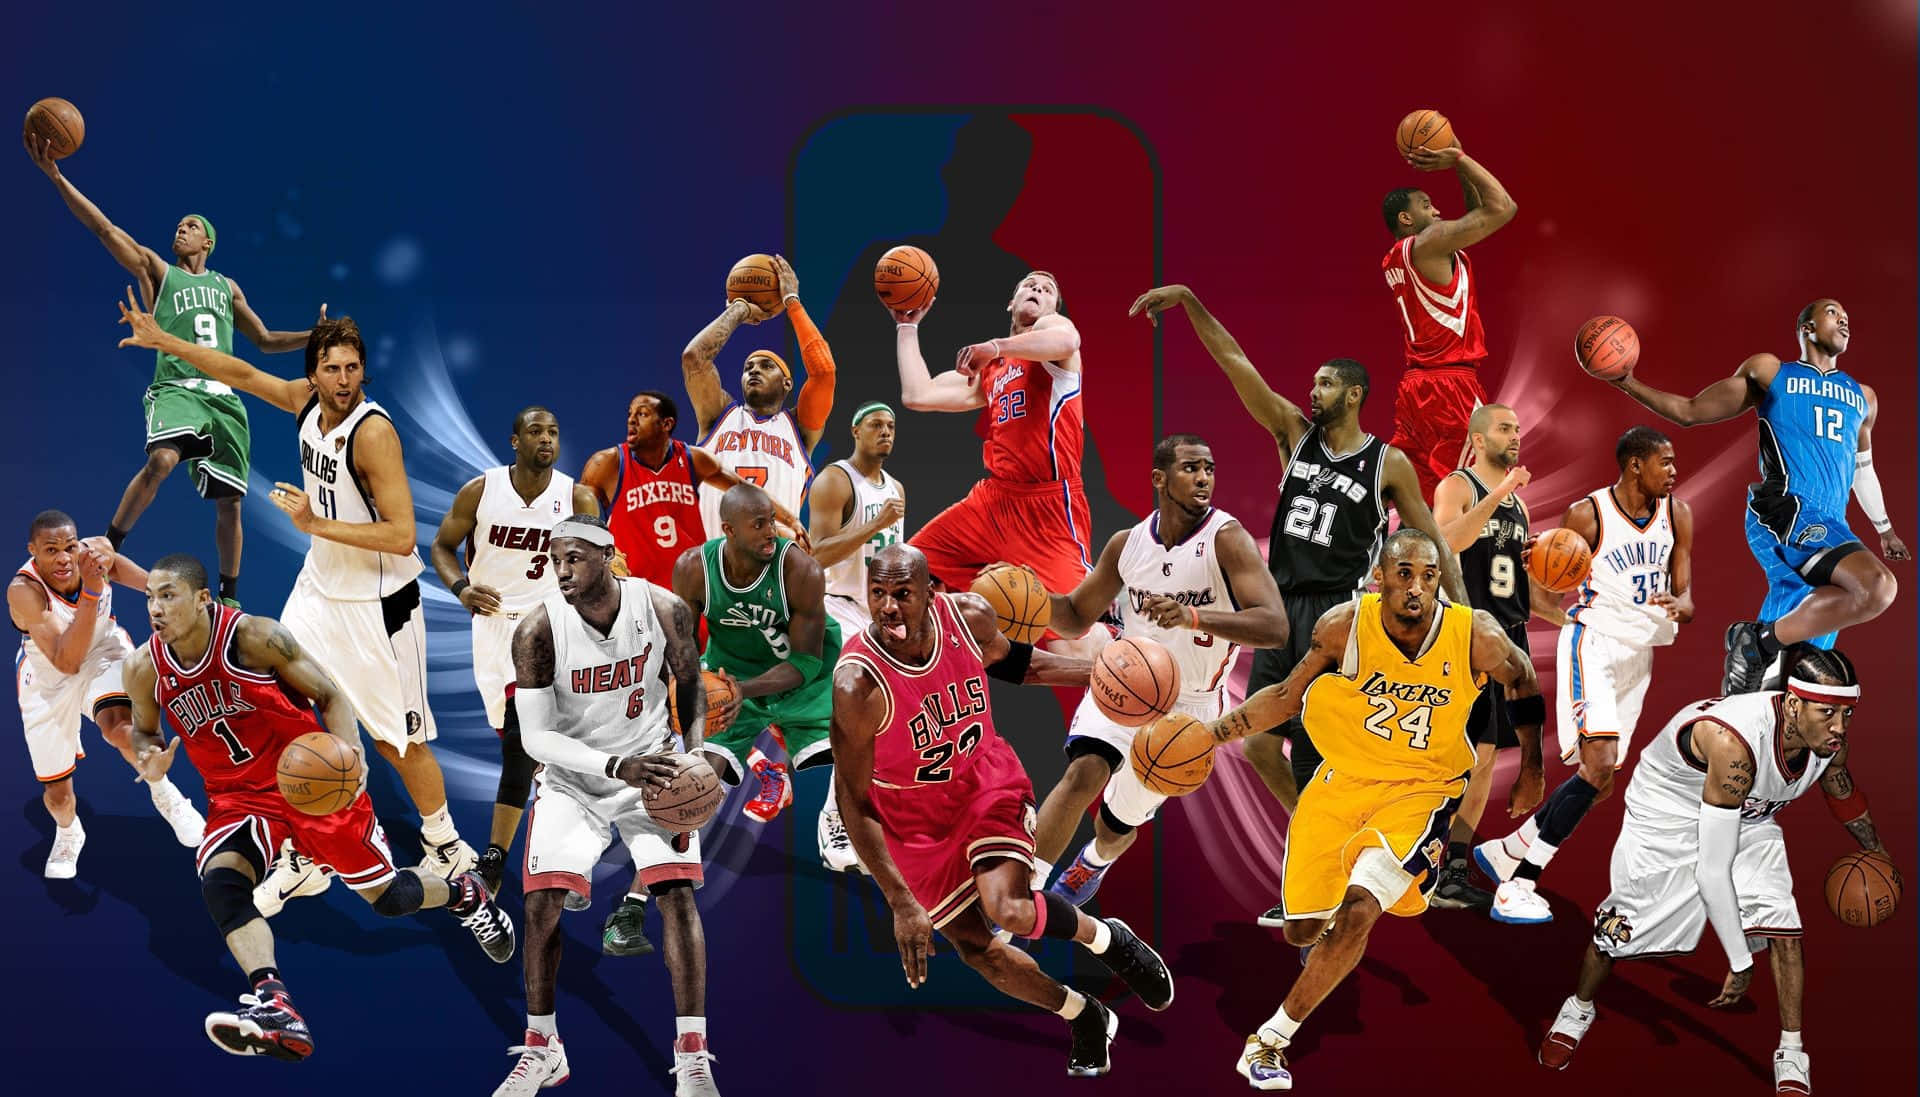 NBA Basketball Teams Best Background